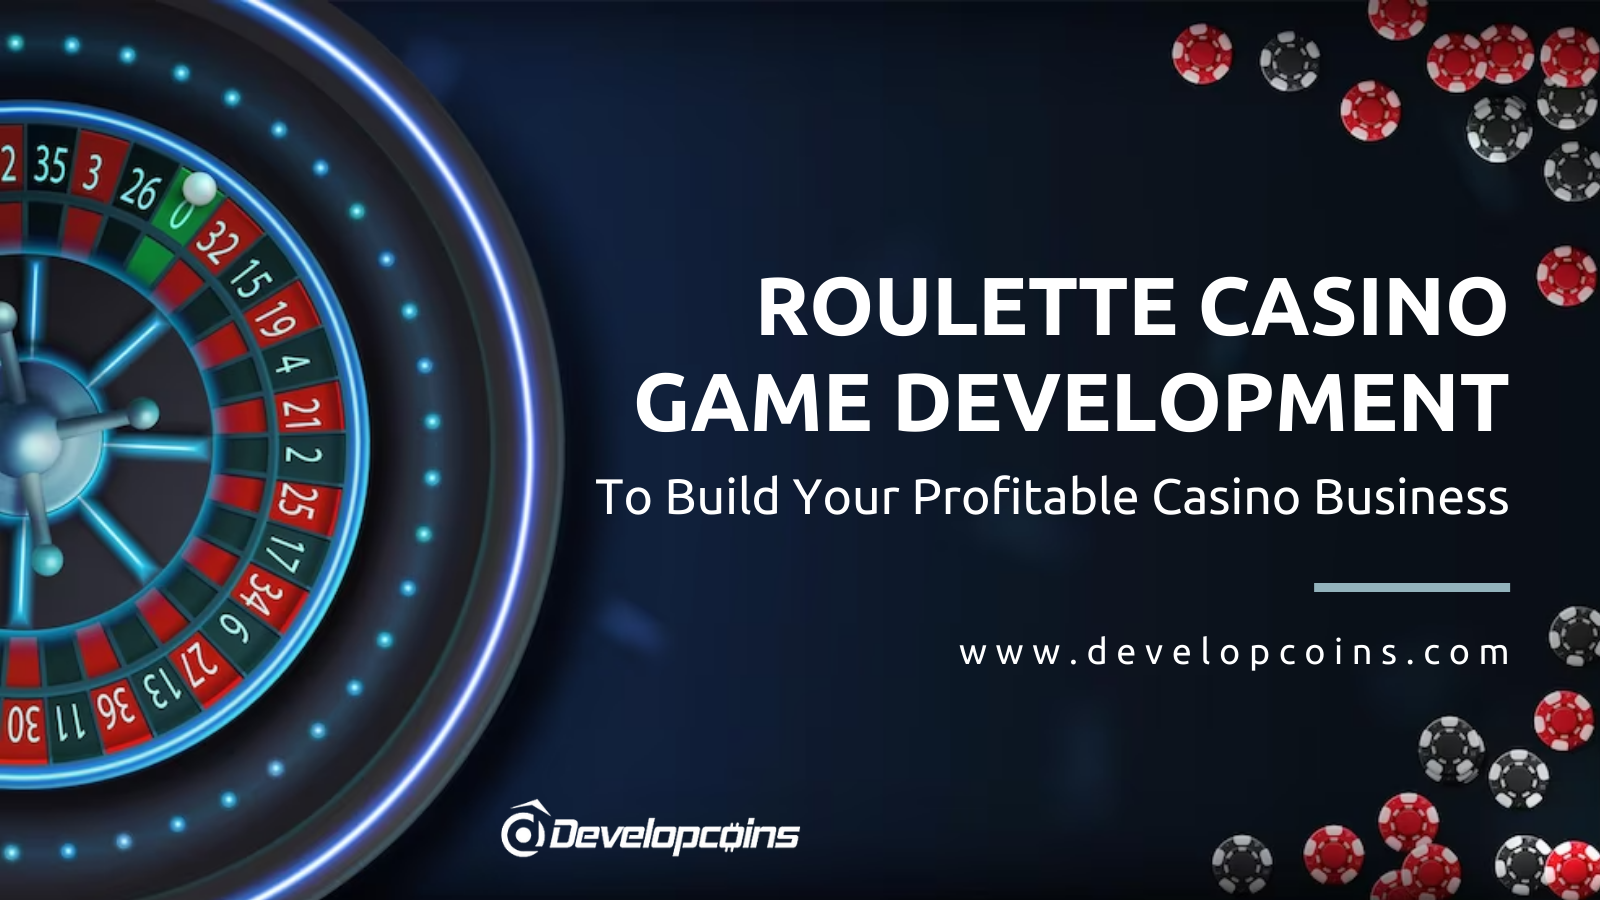 Roulette Casino Game Development: To Build Your Profitable Casino Business